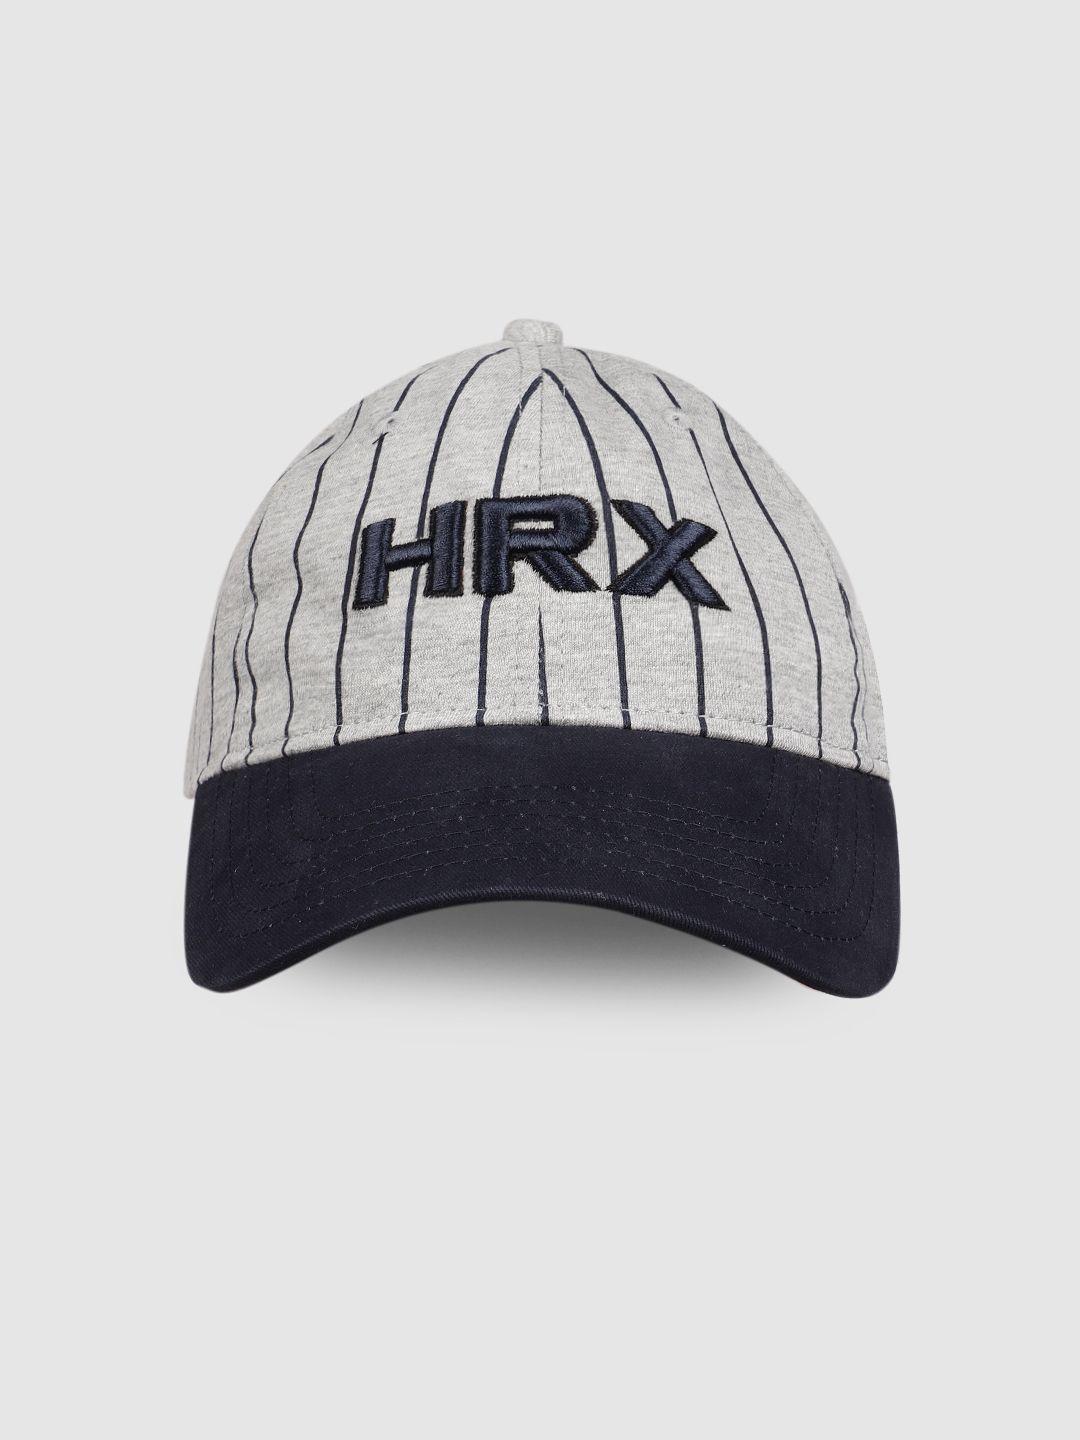 hrx by hrithik roshan unisex grey & navy blue striped baseball cap